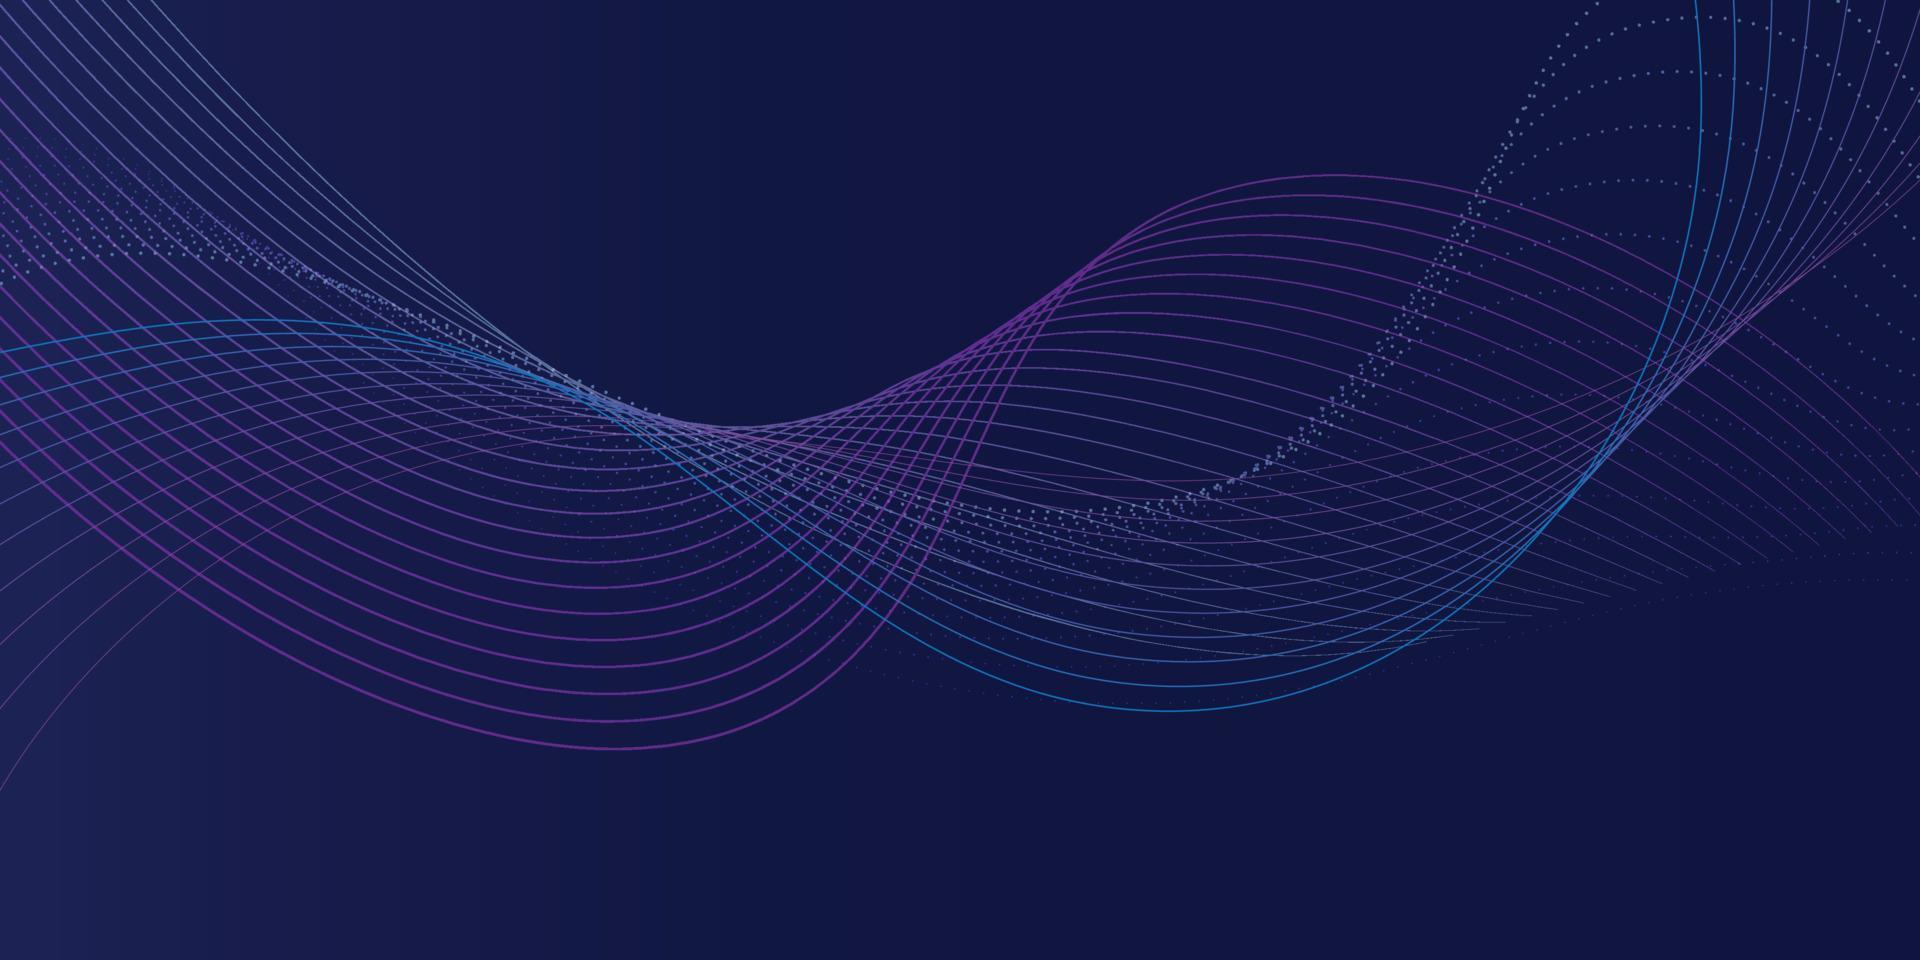 elemento de onda abstracto para diseño.tecnología futurista.ilustración,vector,eps10 vector